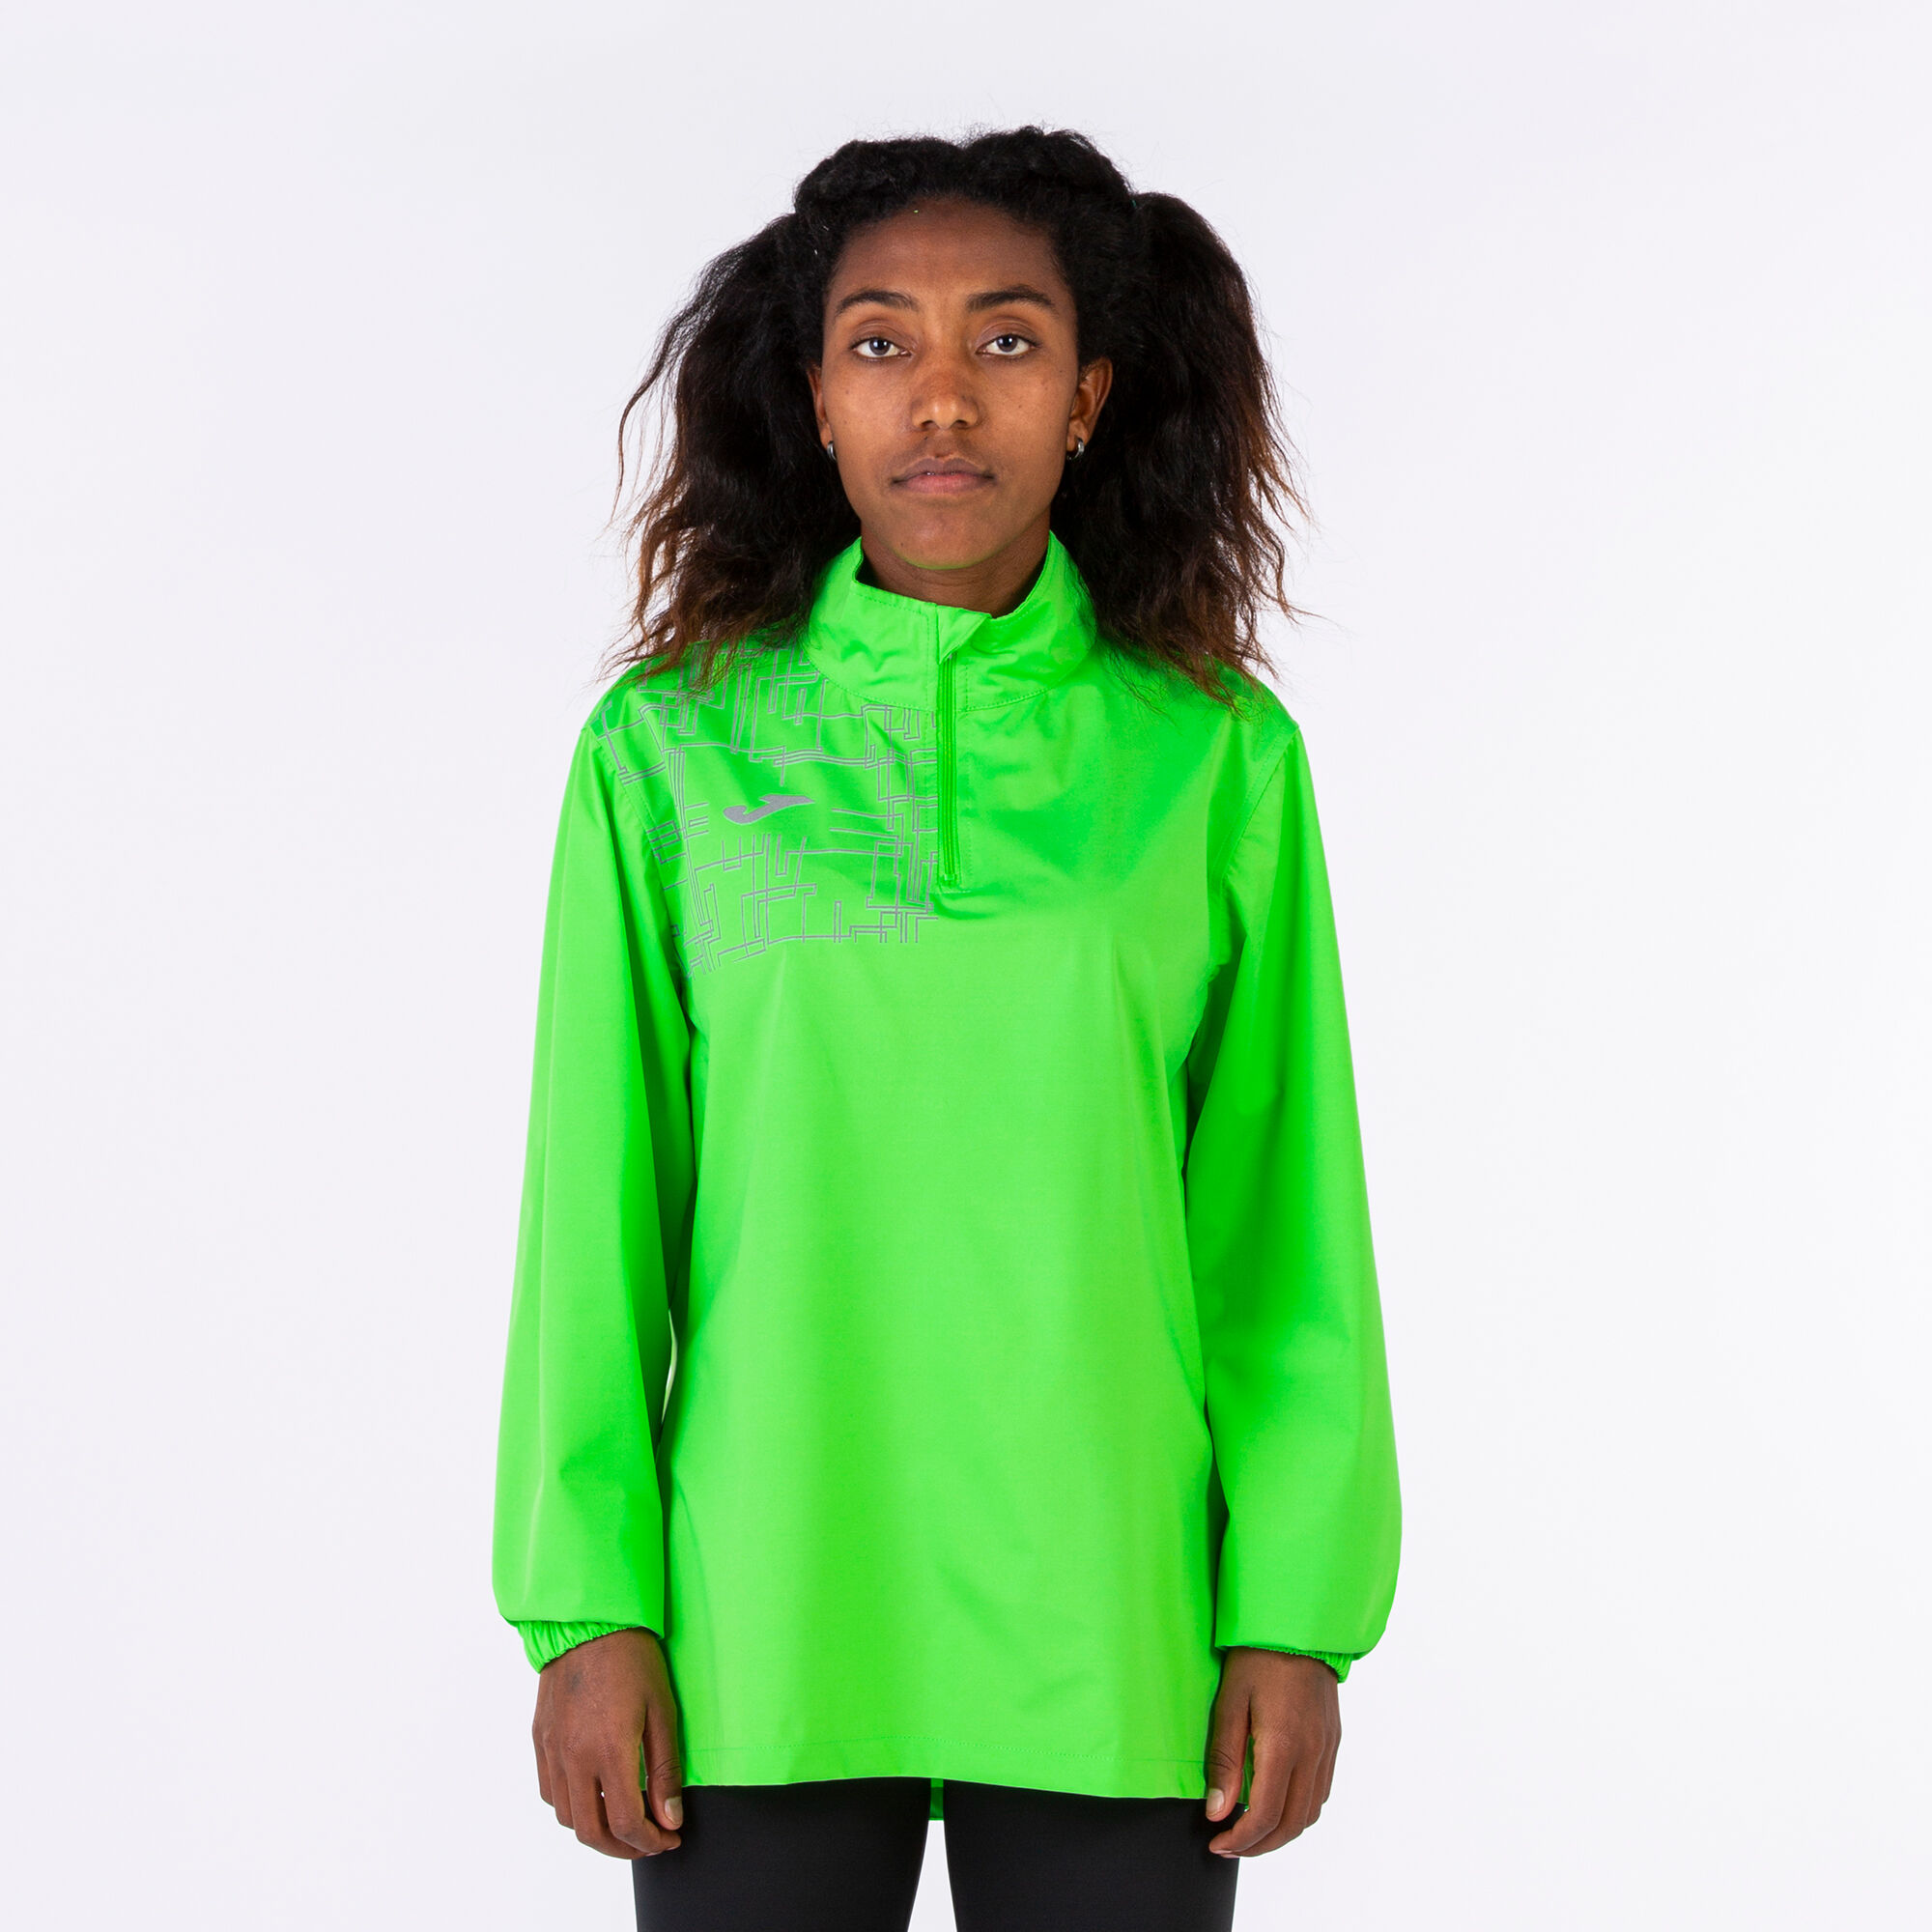 Sweatshirt woman Elite VIII fluorescent green